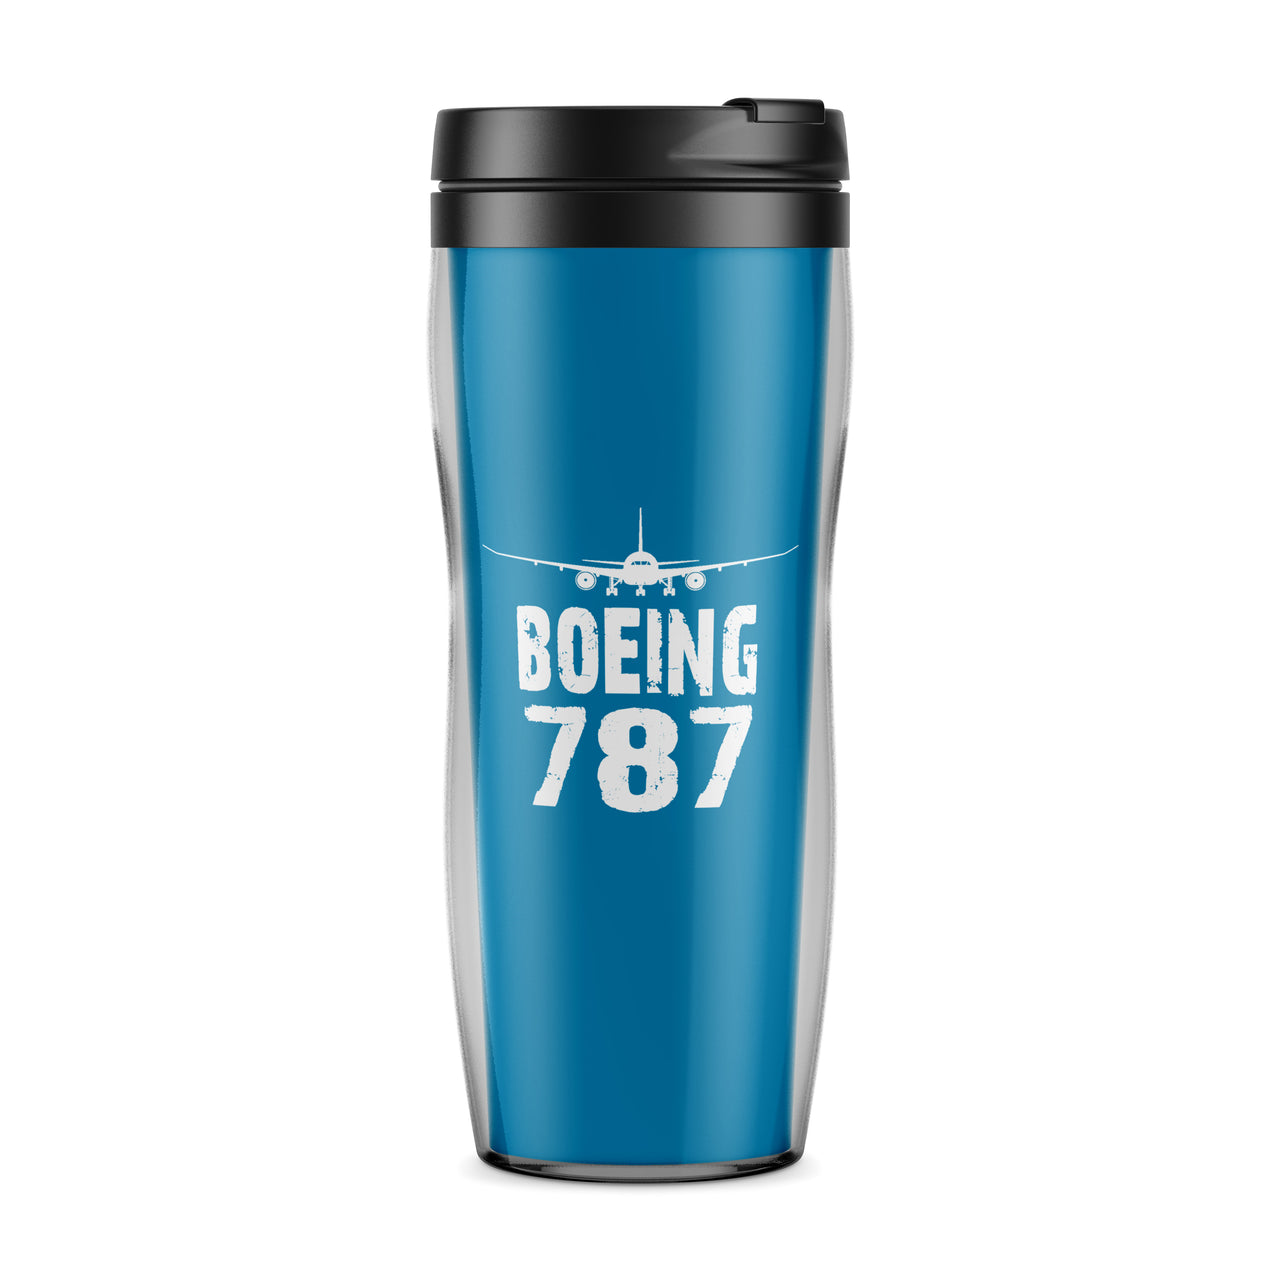 Boeing 787 & Plane Designed Travel Mugs